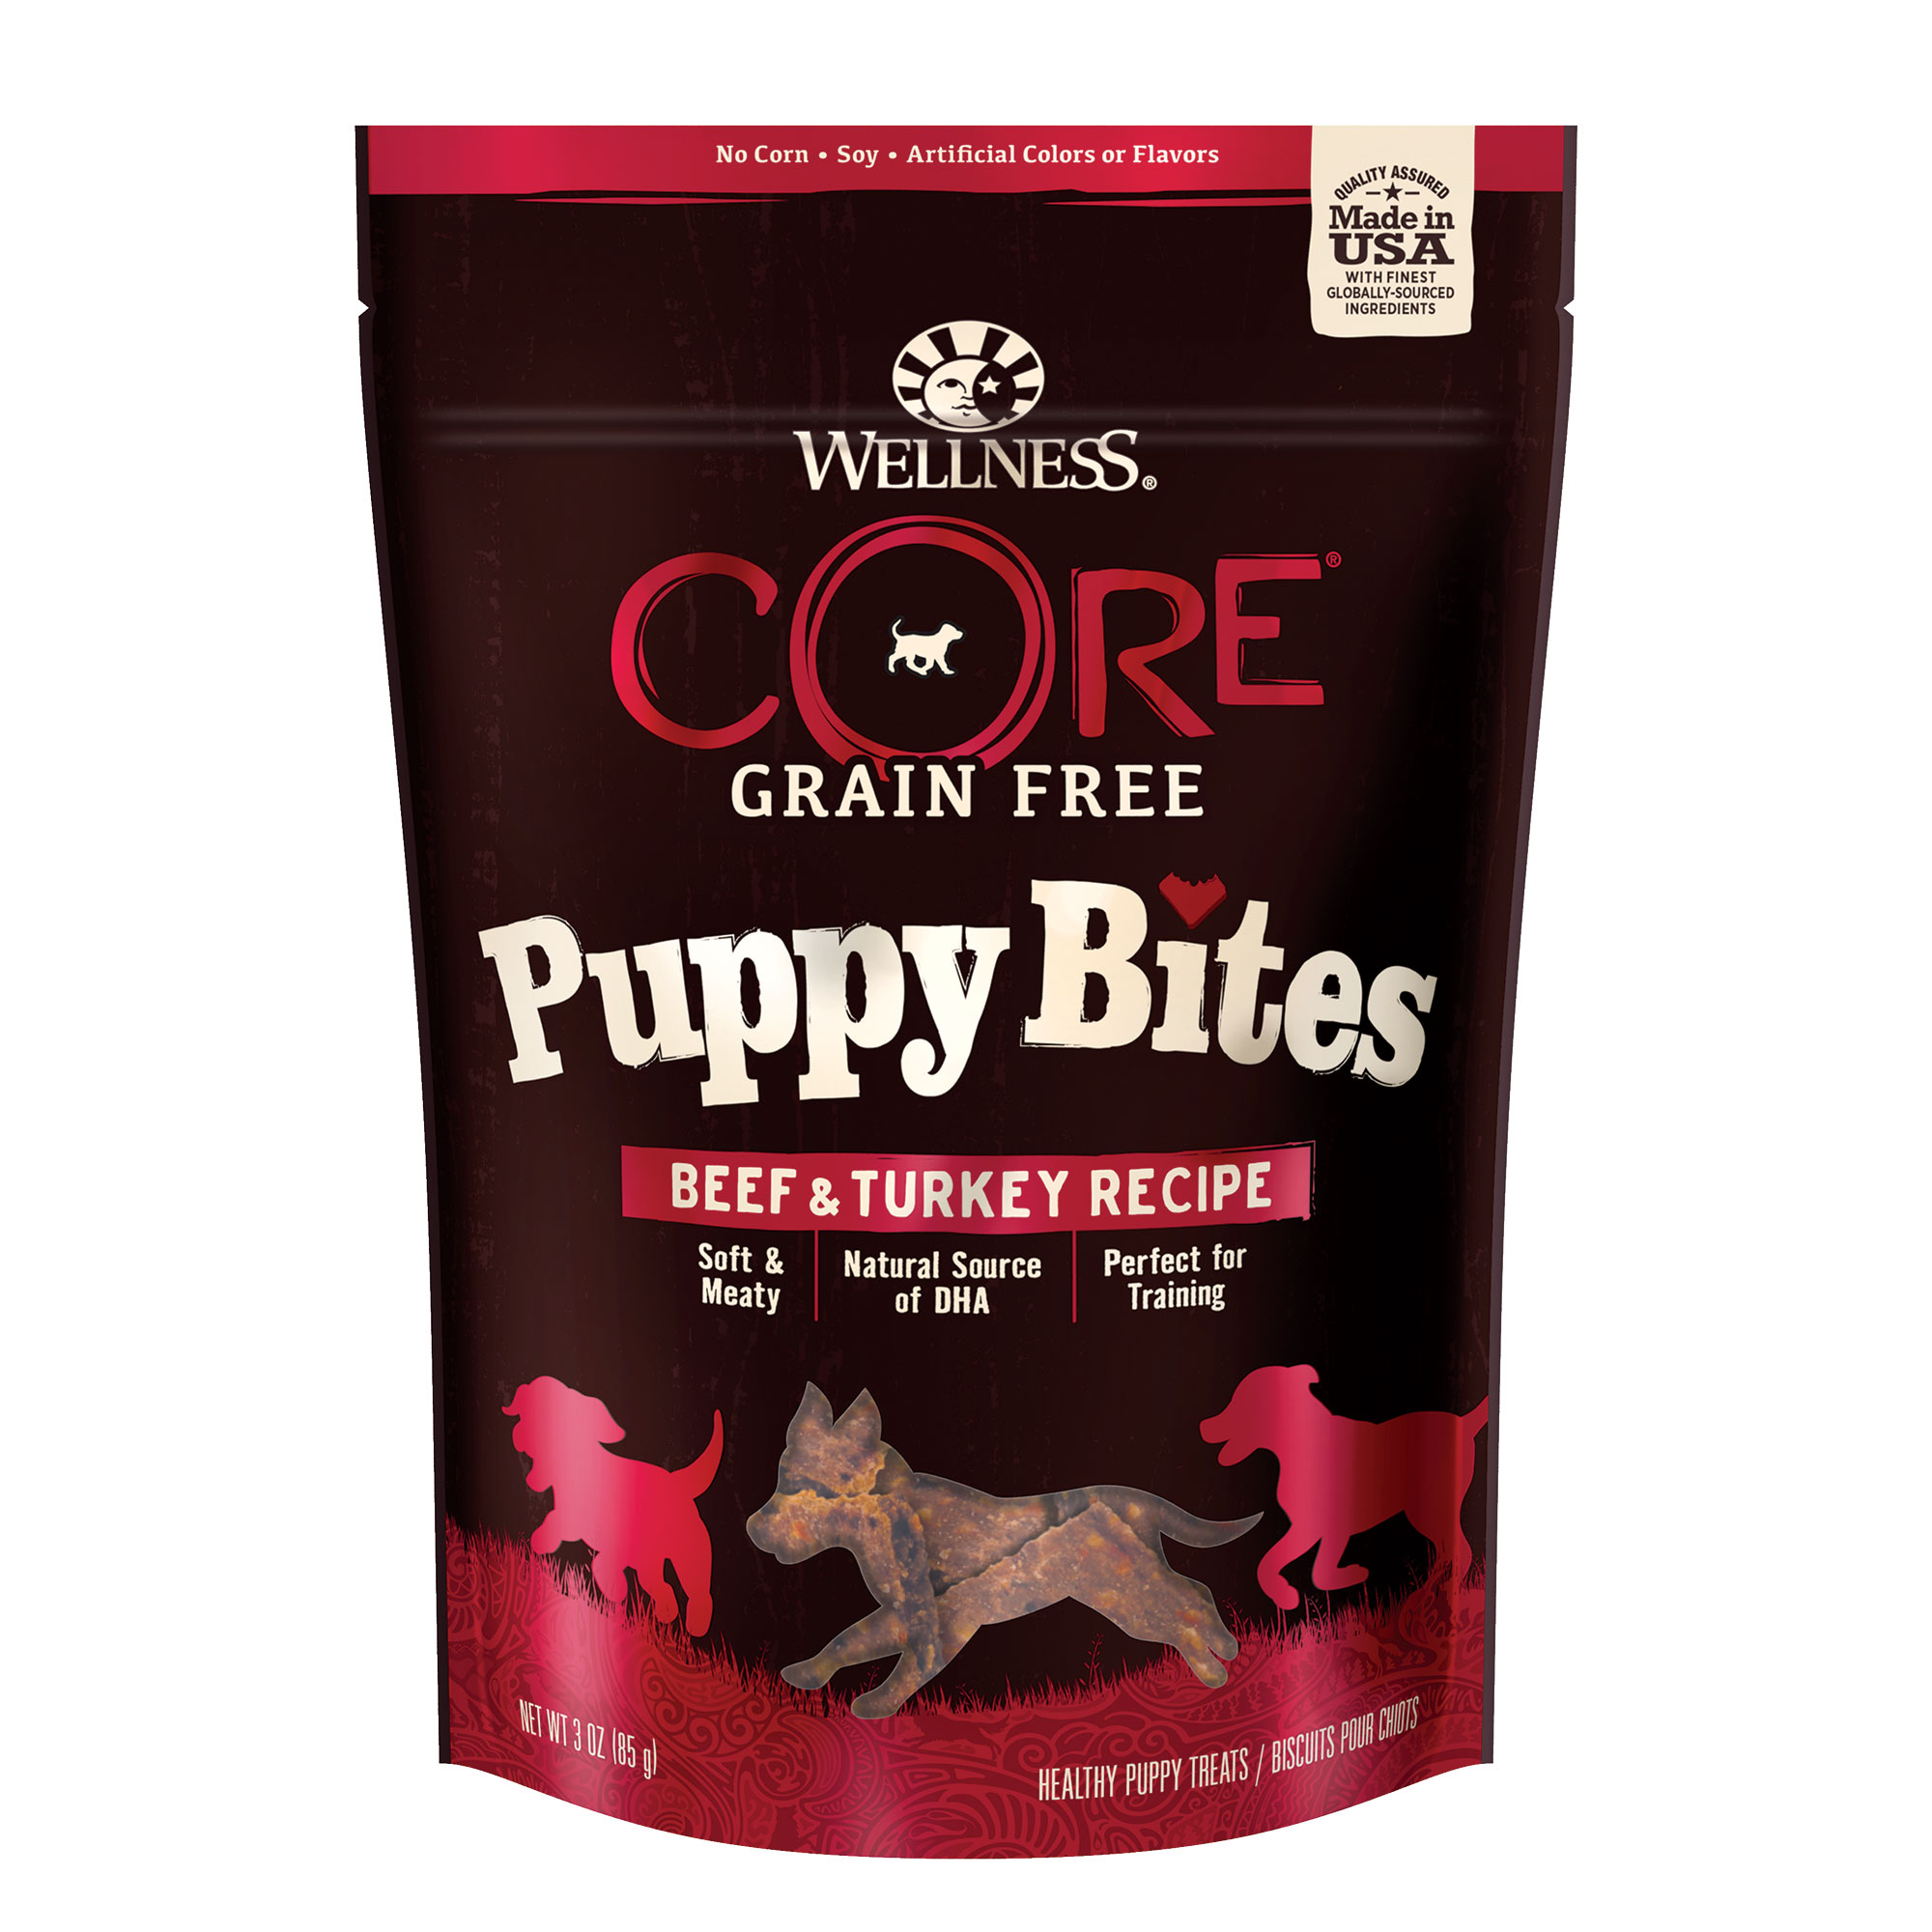 WELLNESS CORE Grain Free Puppy Bites, Beef & Turkey Recipe, 3 oz Bag - image 1 of 7